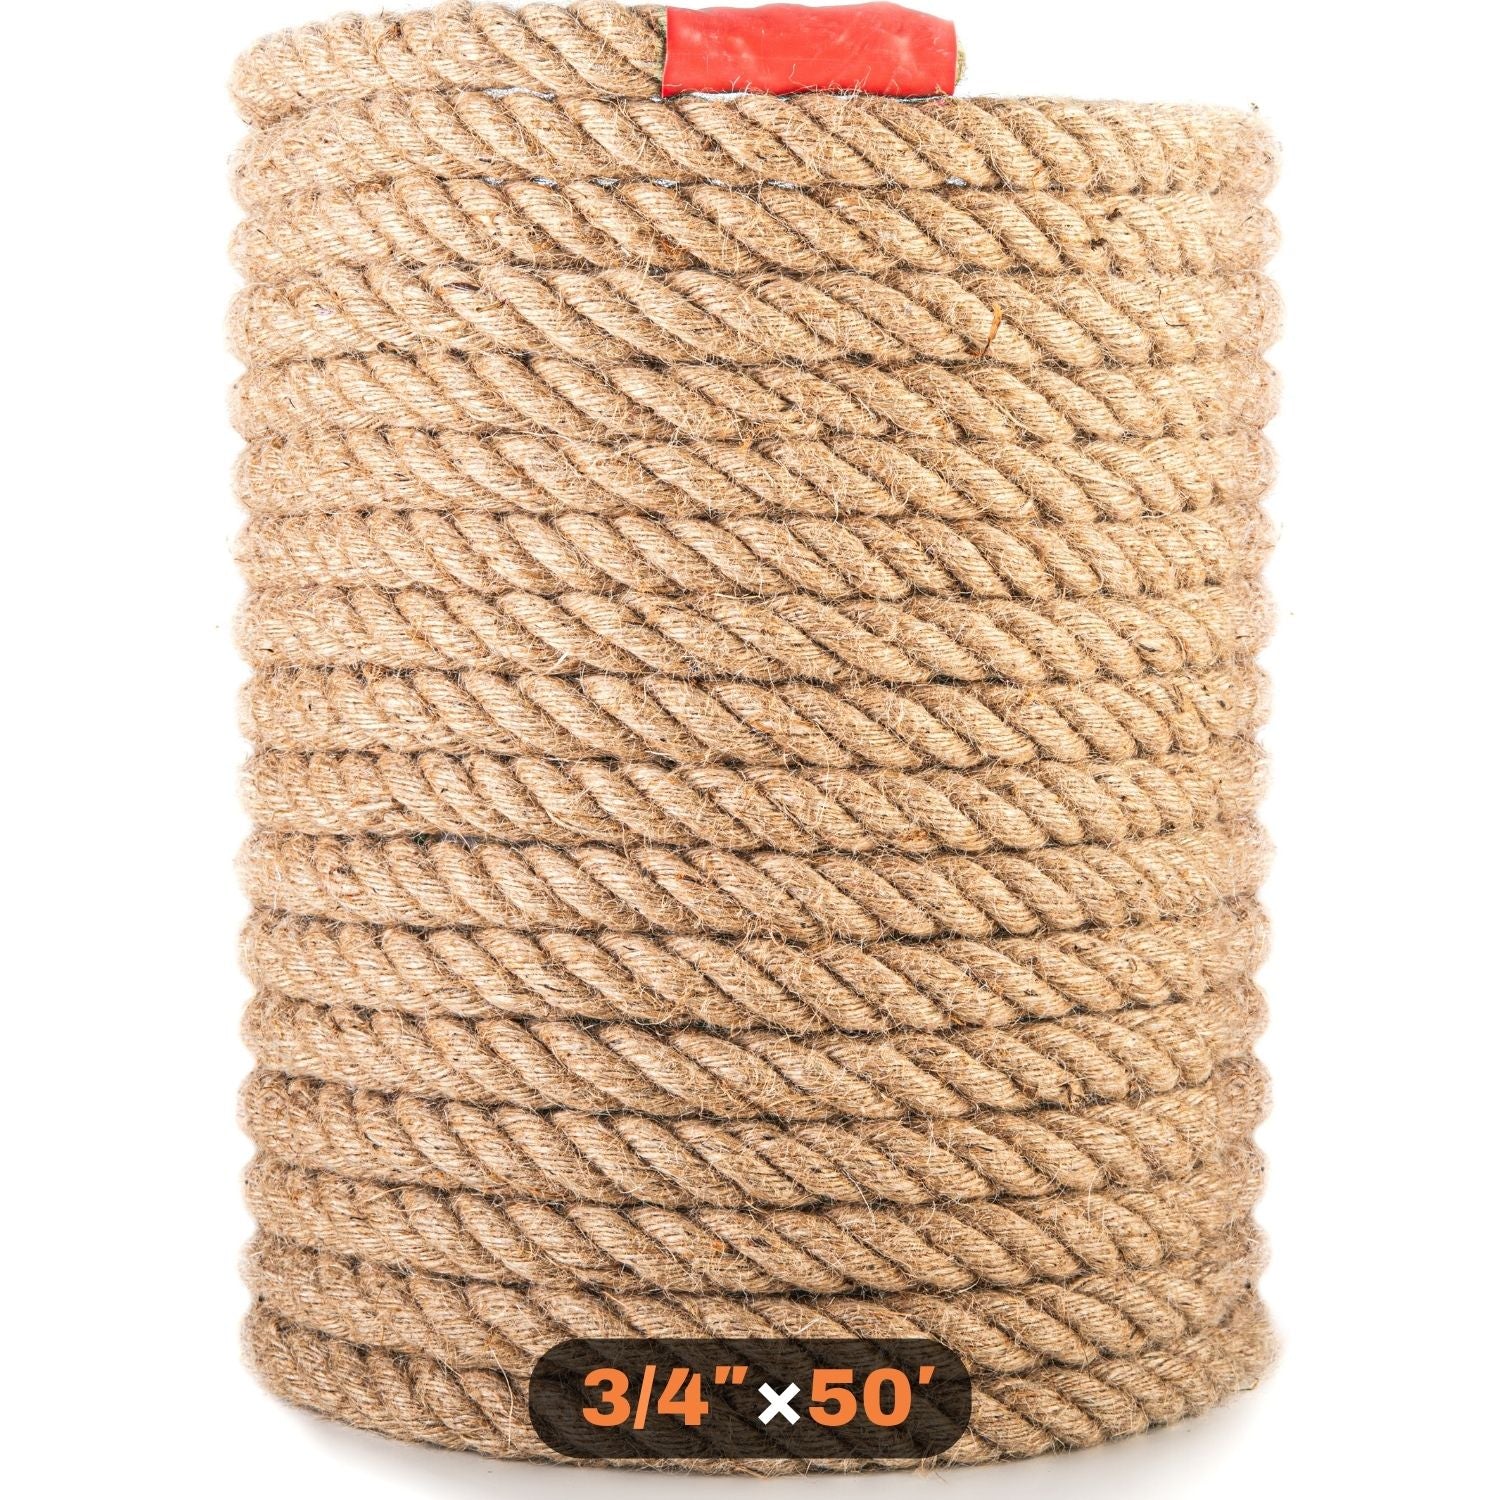 Manila Rope 3/4″×50′- Nautical Ropes - Natural Jute Rope - Large Decorative Hemp Rope - Thick Heavy Duty 